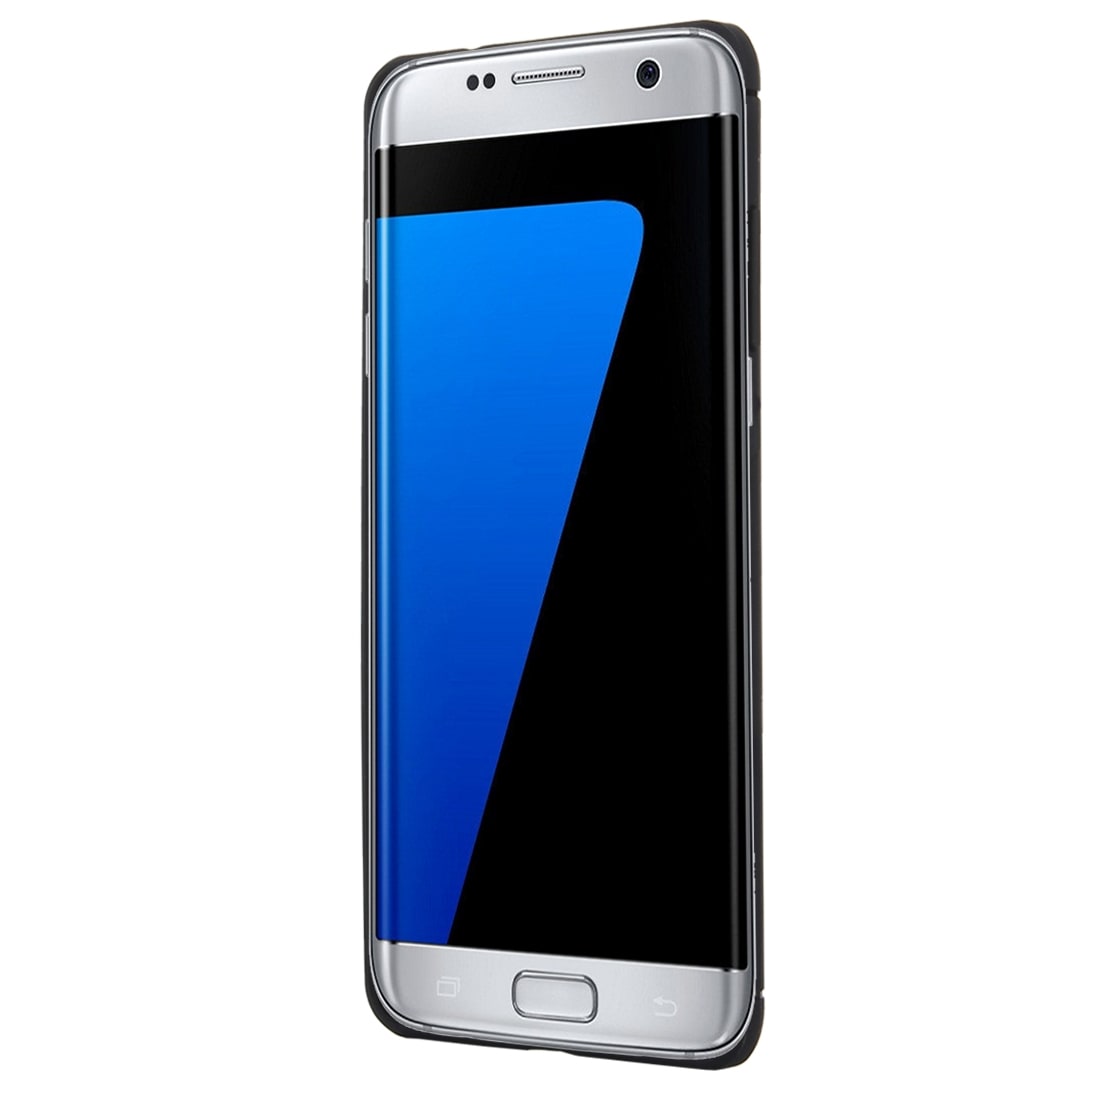 Carbon Fiber skall Samsung Galaxy S7 Edge